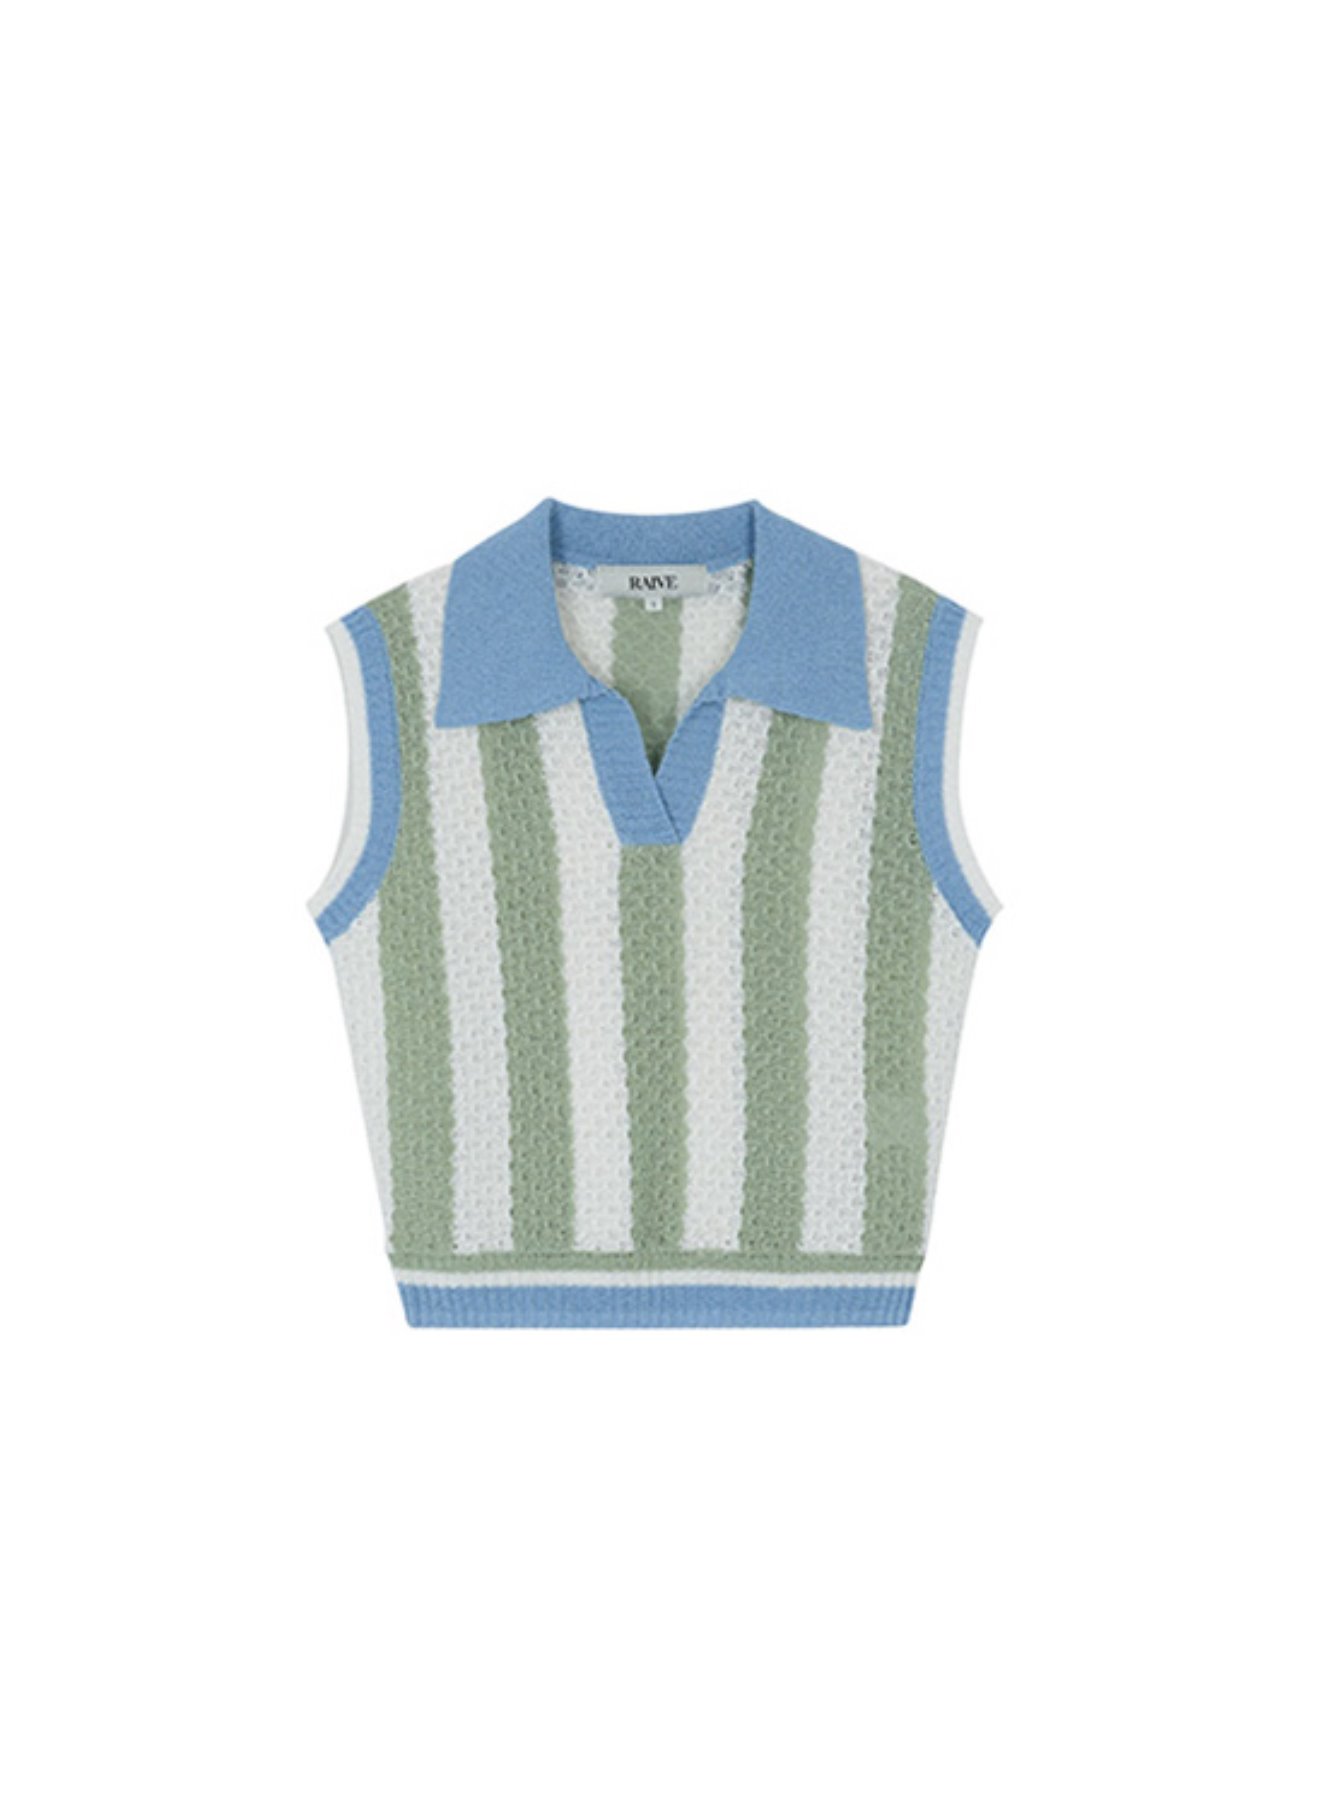 Open-collar Stripe Knit Vest in Blue VK2SV130-22